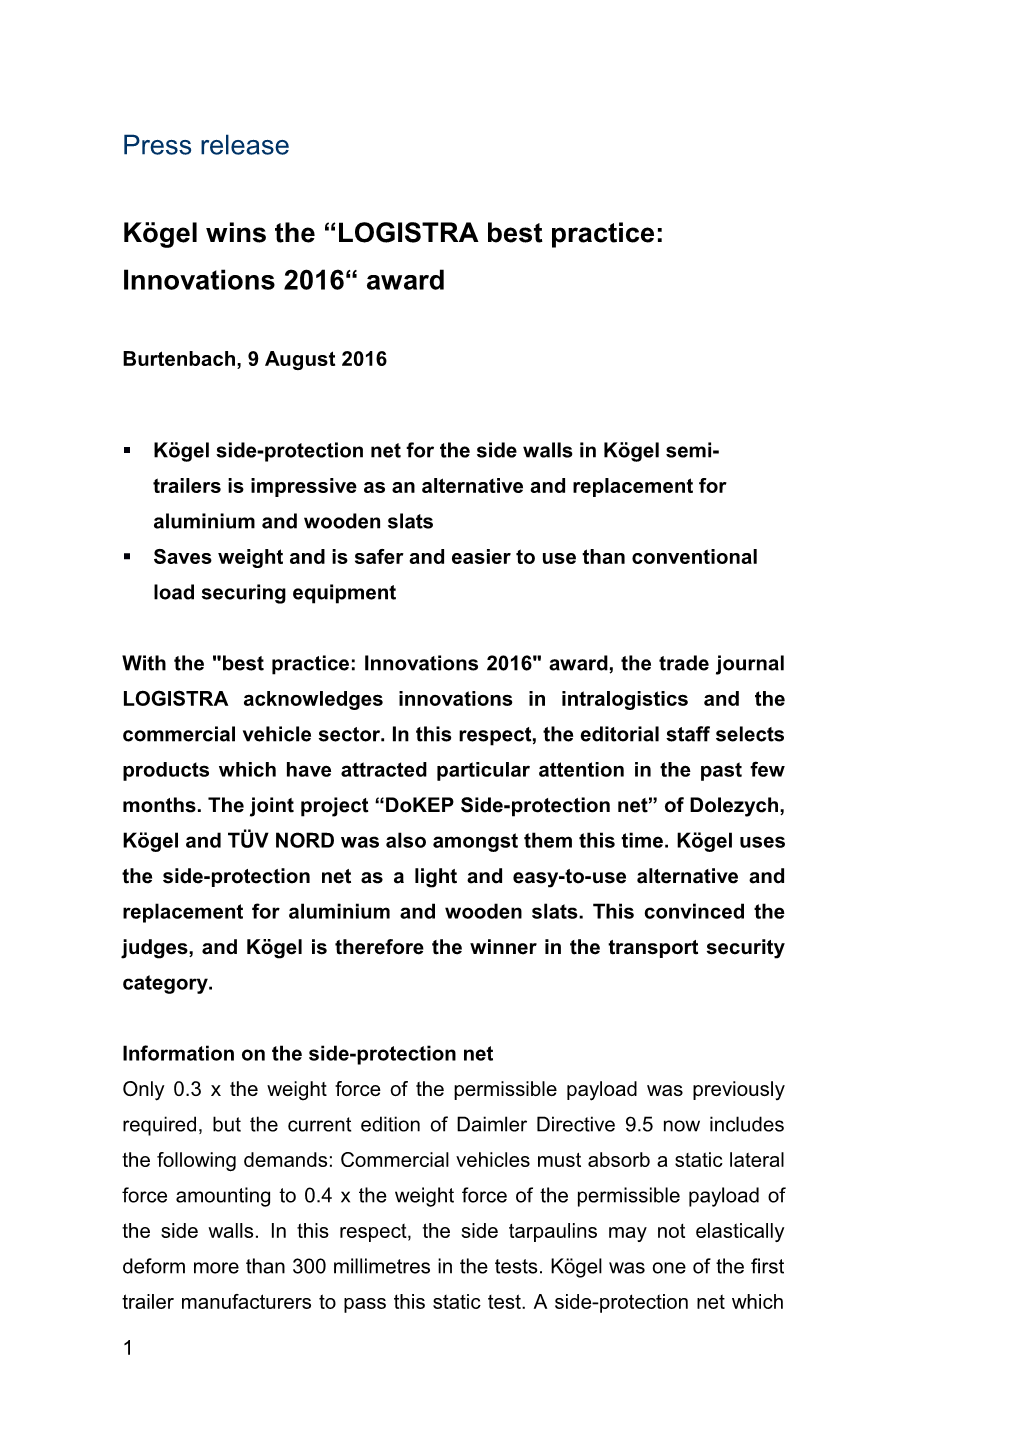 Kögel Wins the LOGISTRA Best Practice: Innovations 2016 Award